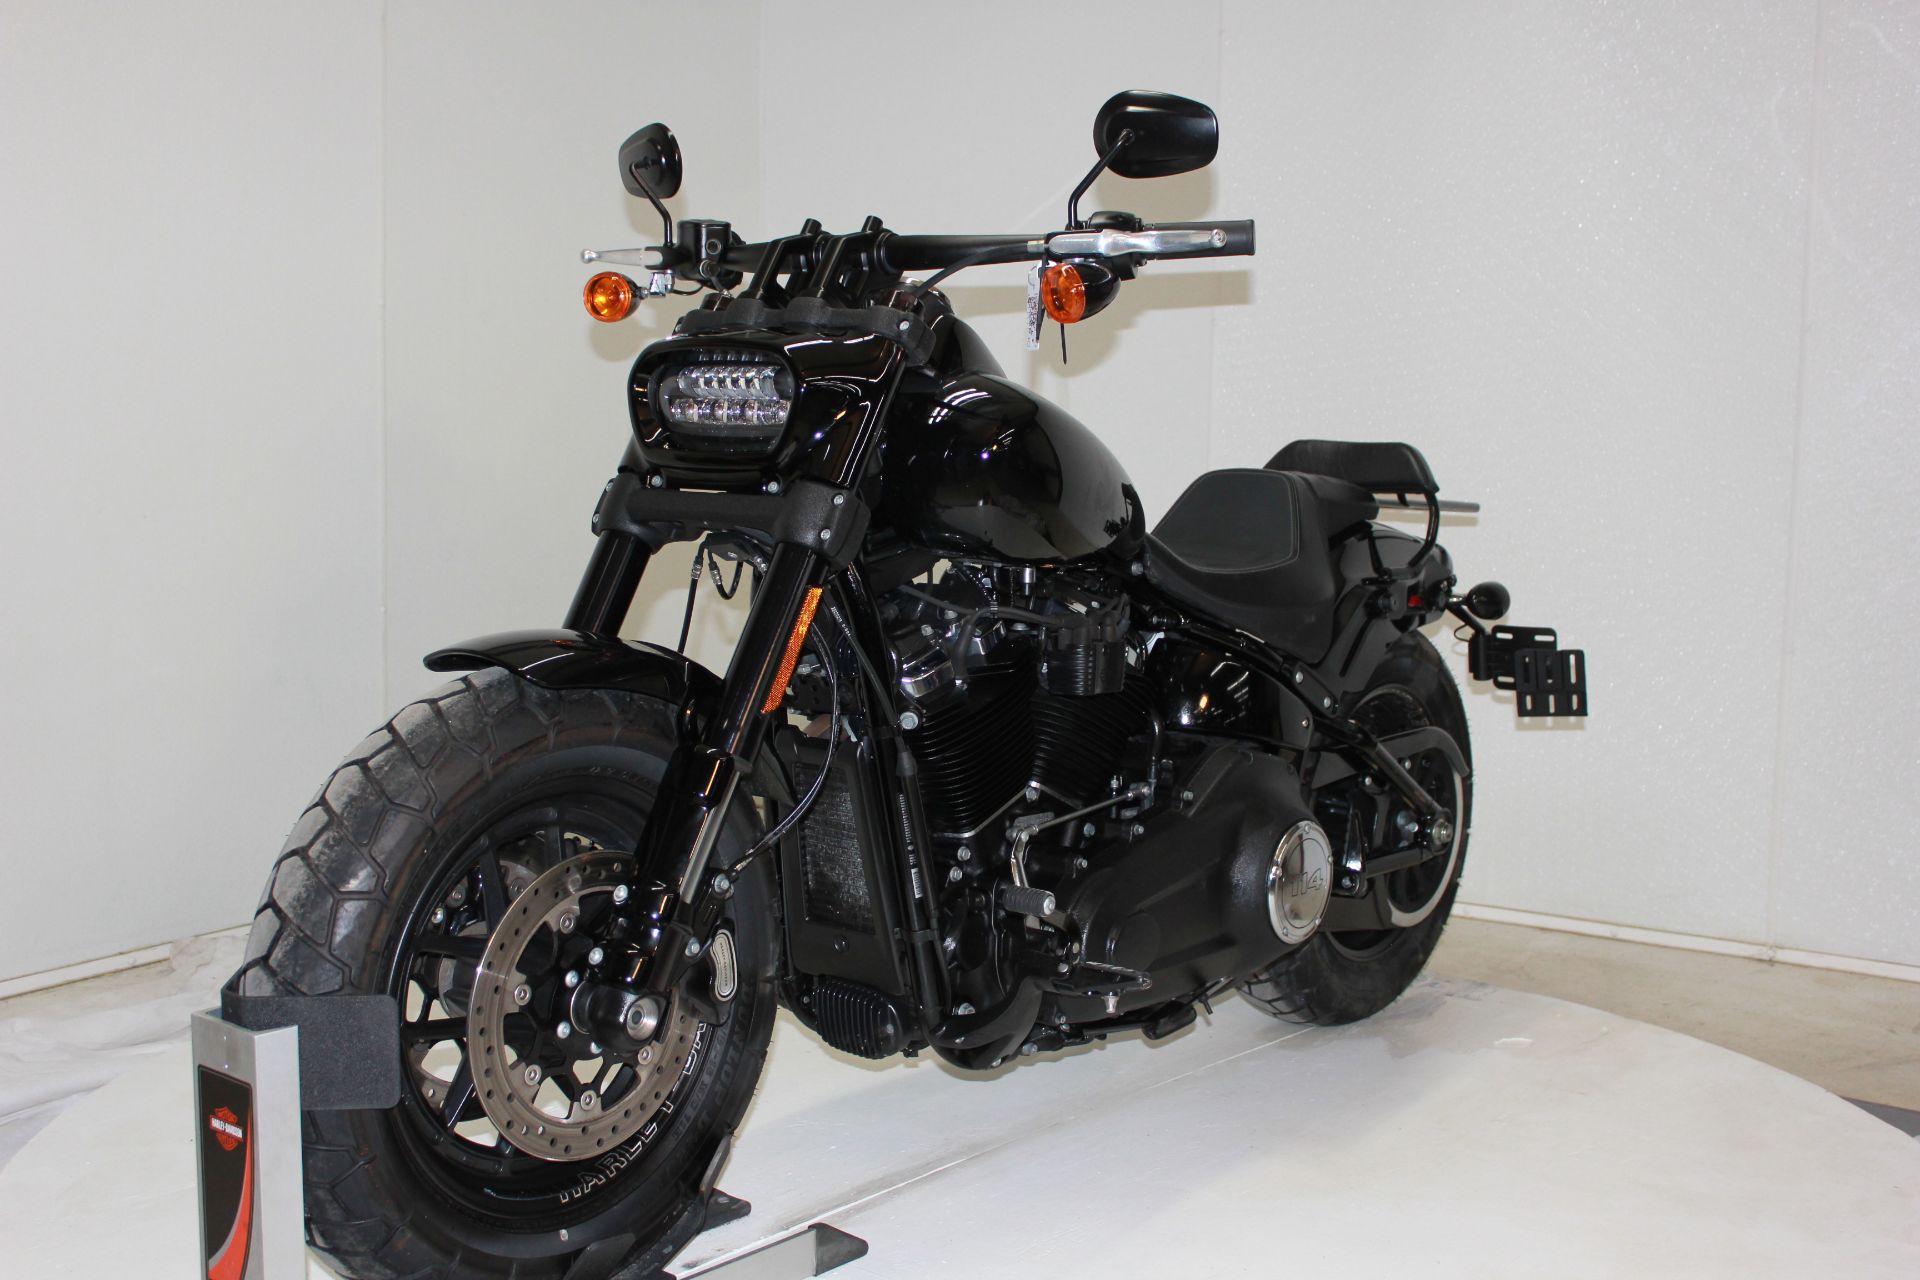 2020 Harley-Davidson Fat Bob® 114 in Pittsfield, Massachusetts - Photo 8